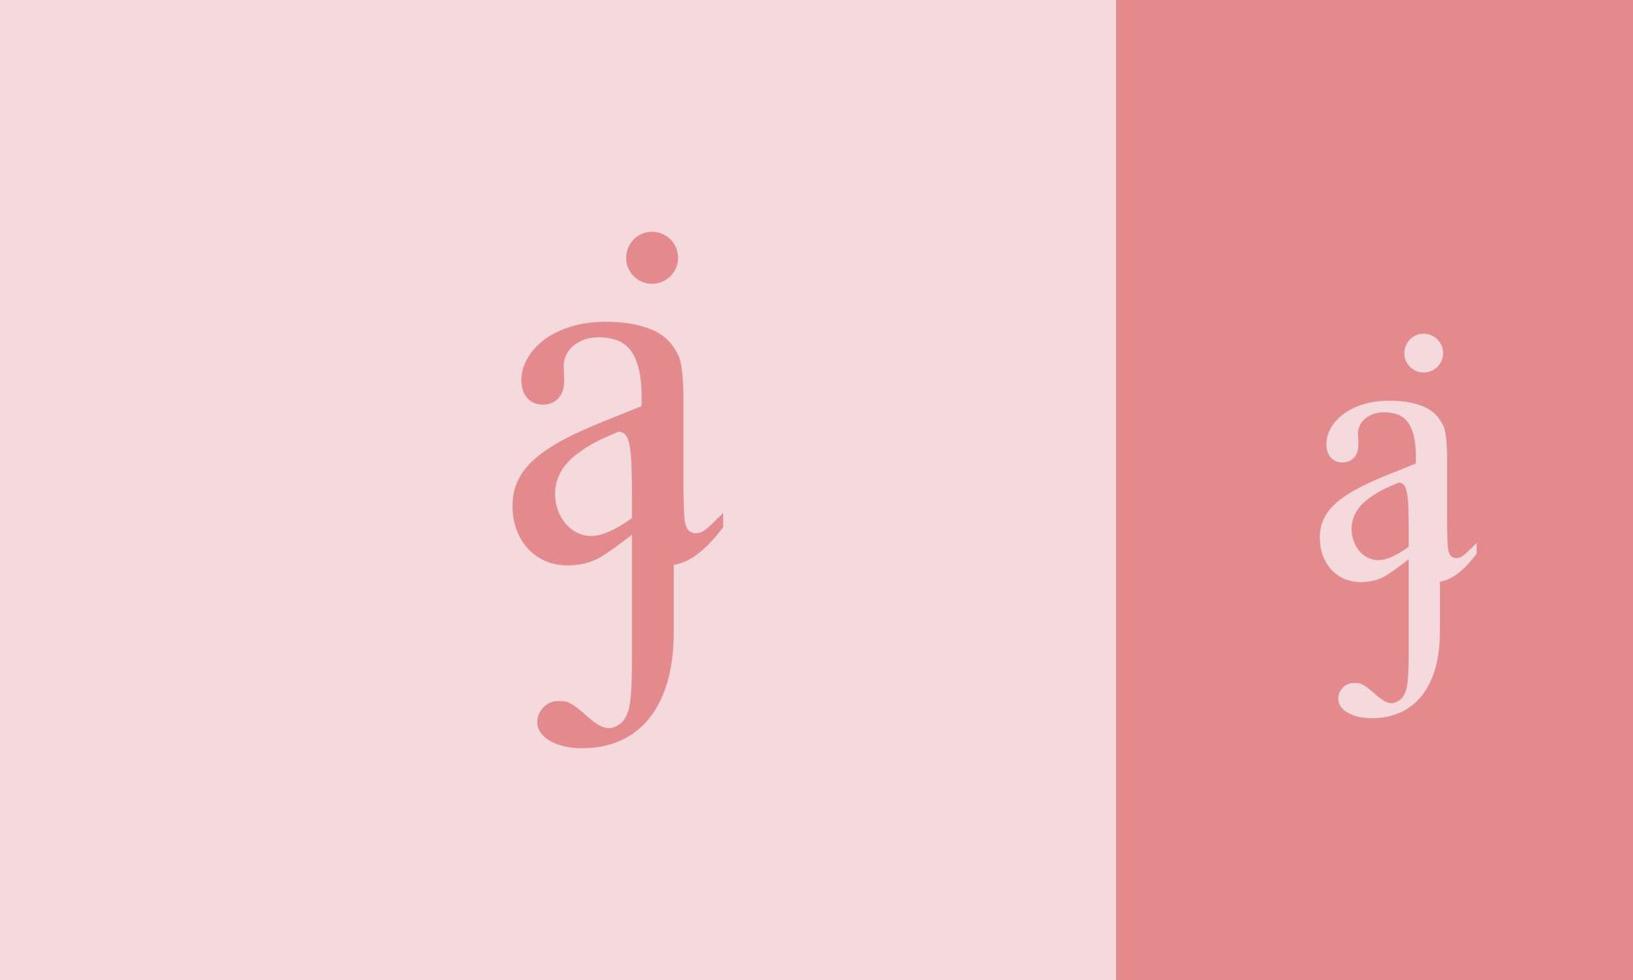 letras do alfabeto iniciais monograma logotipo aj, ja, a e j vetor